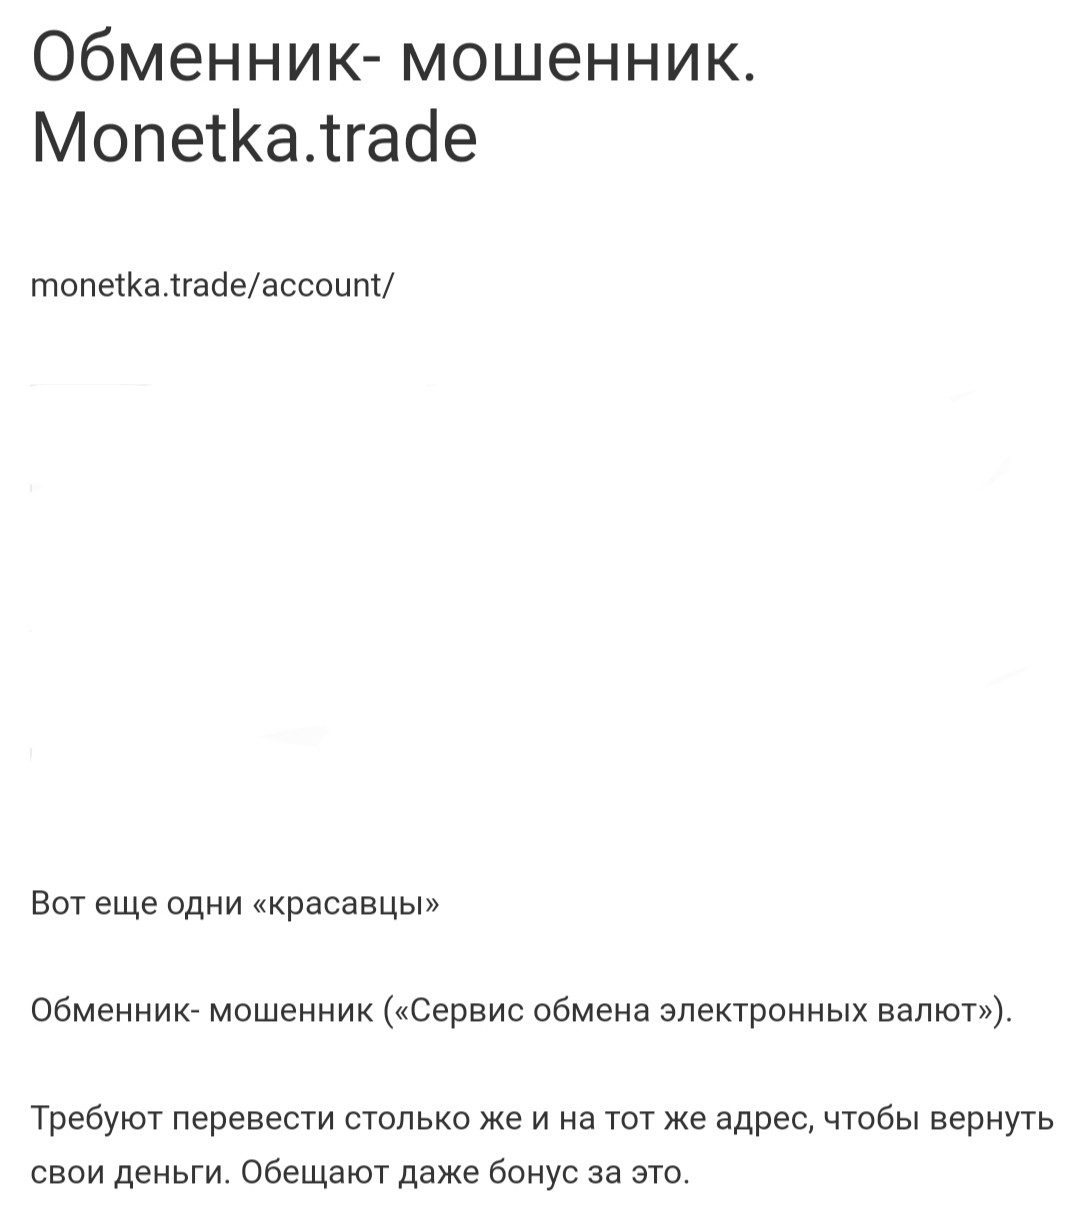 Monetka trade отзывы